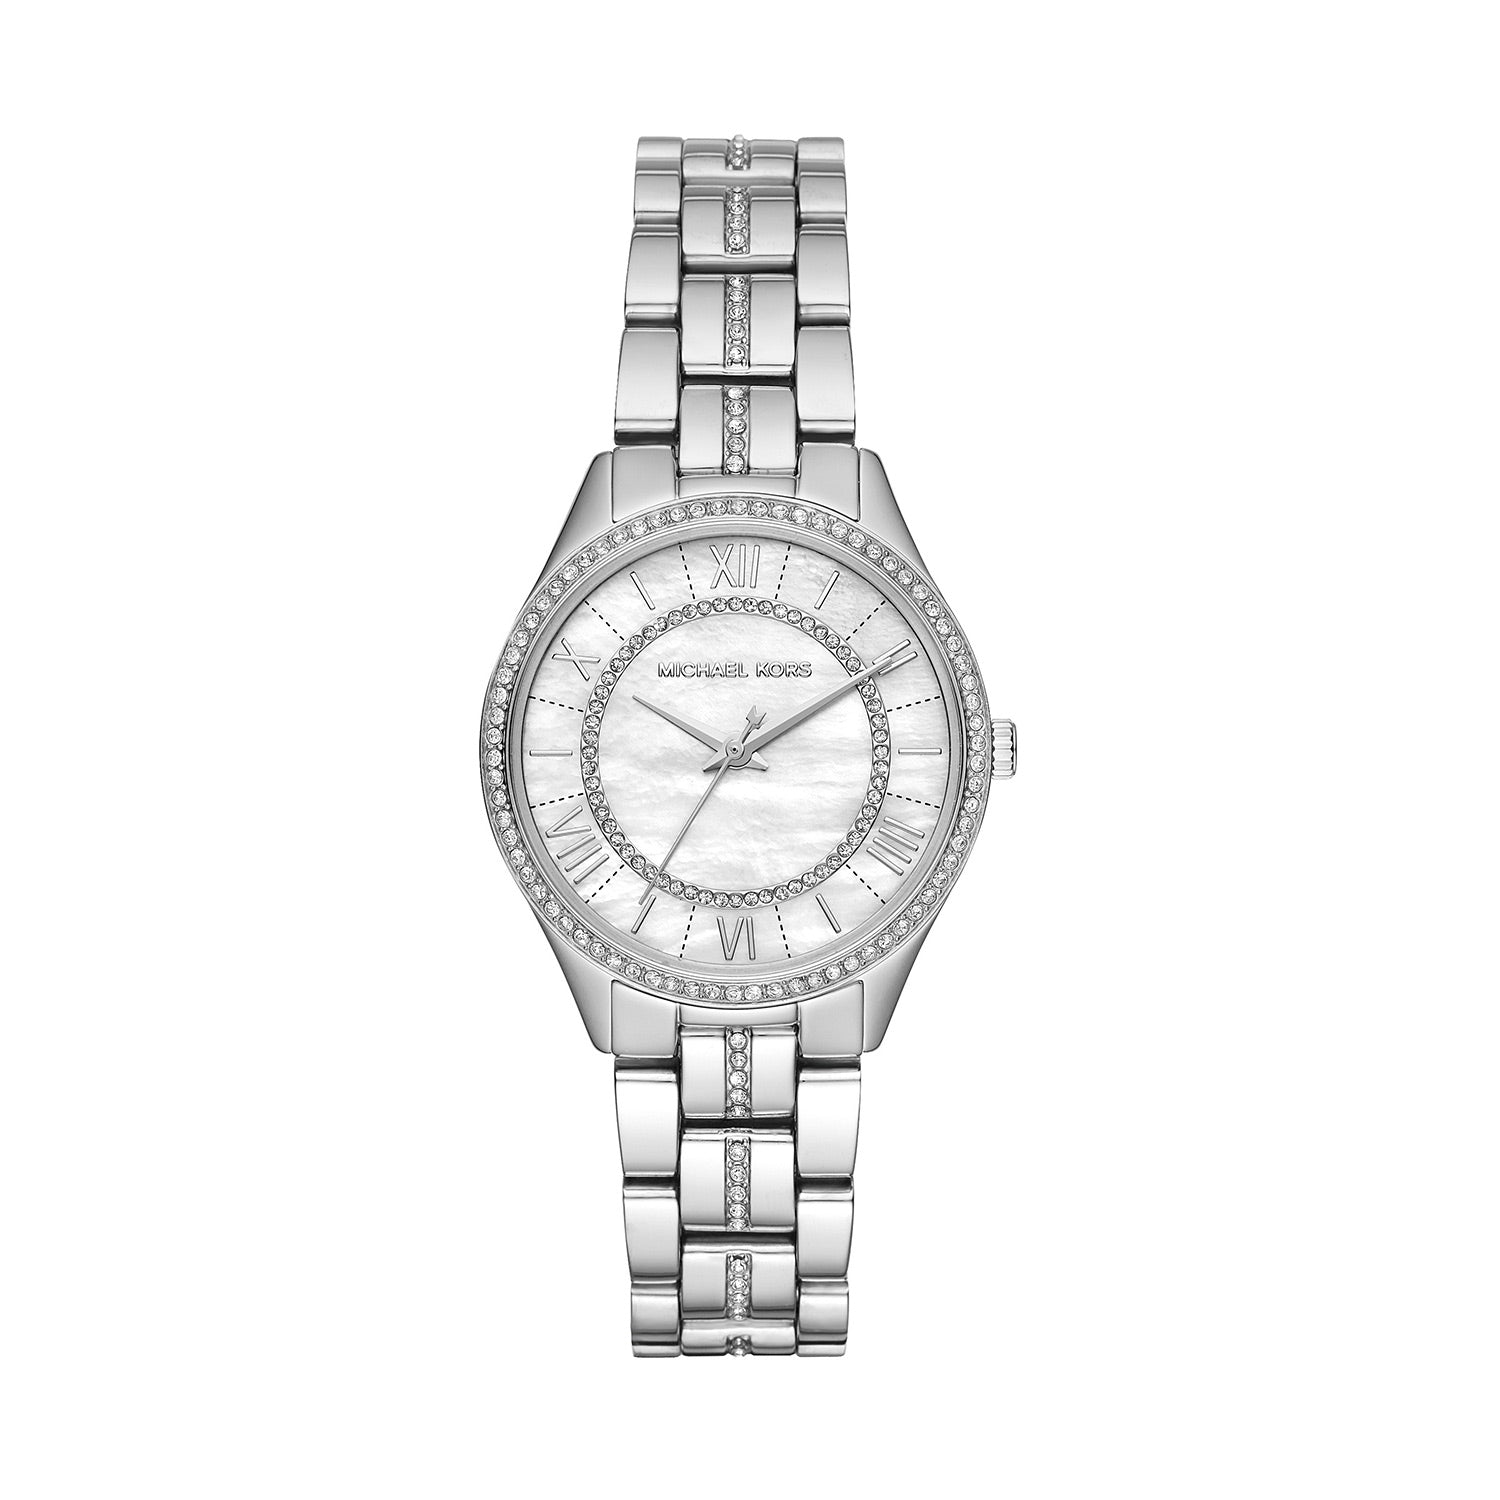 Michael Kors Lauryn Mother of Pearl Dial Silver Steel Strap Watch for Women - MK3900